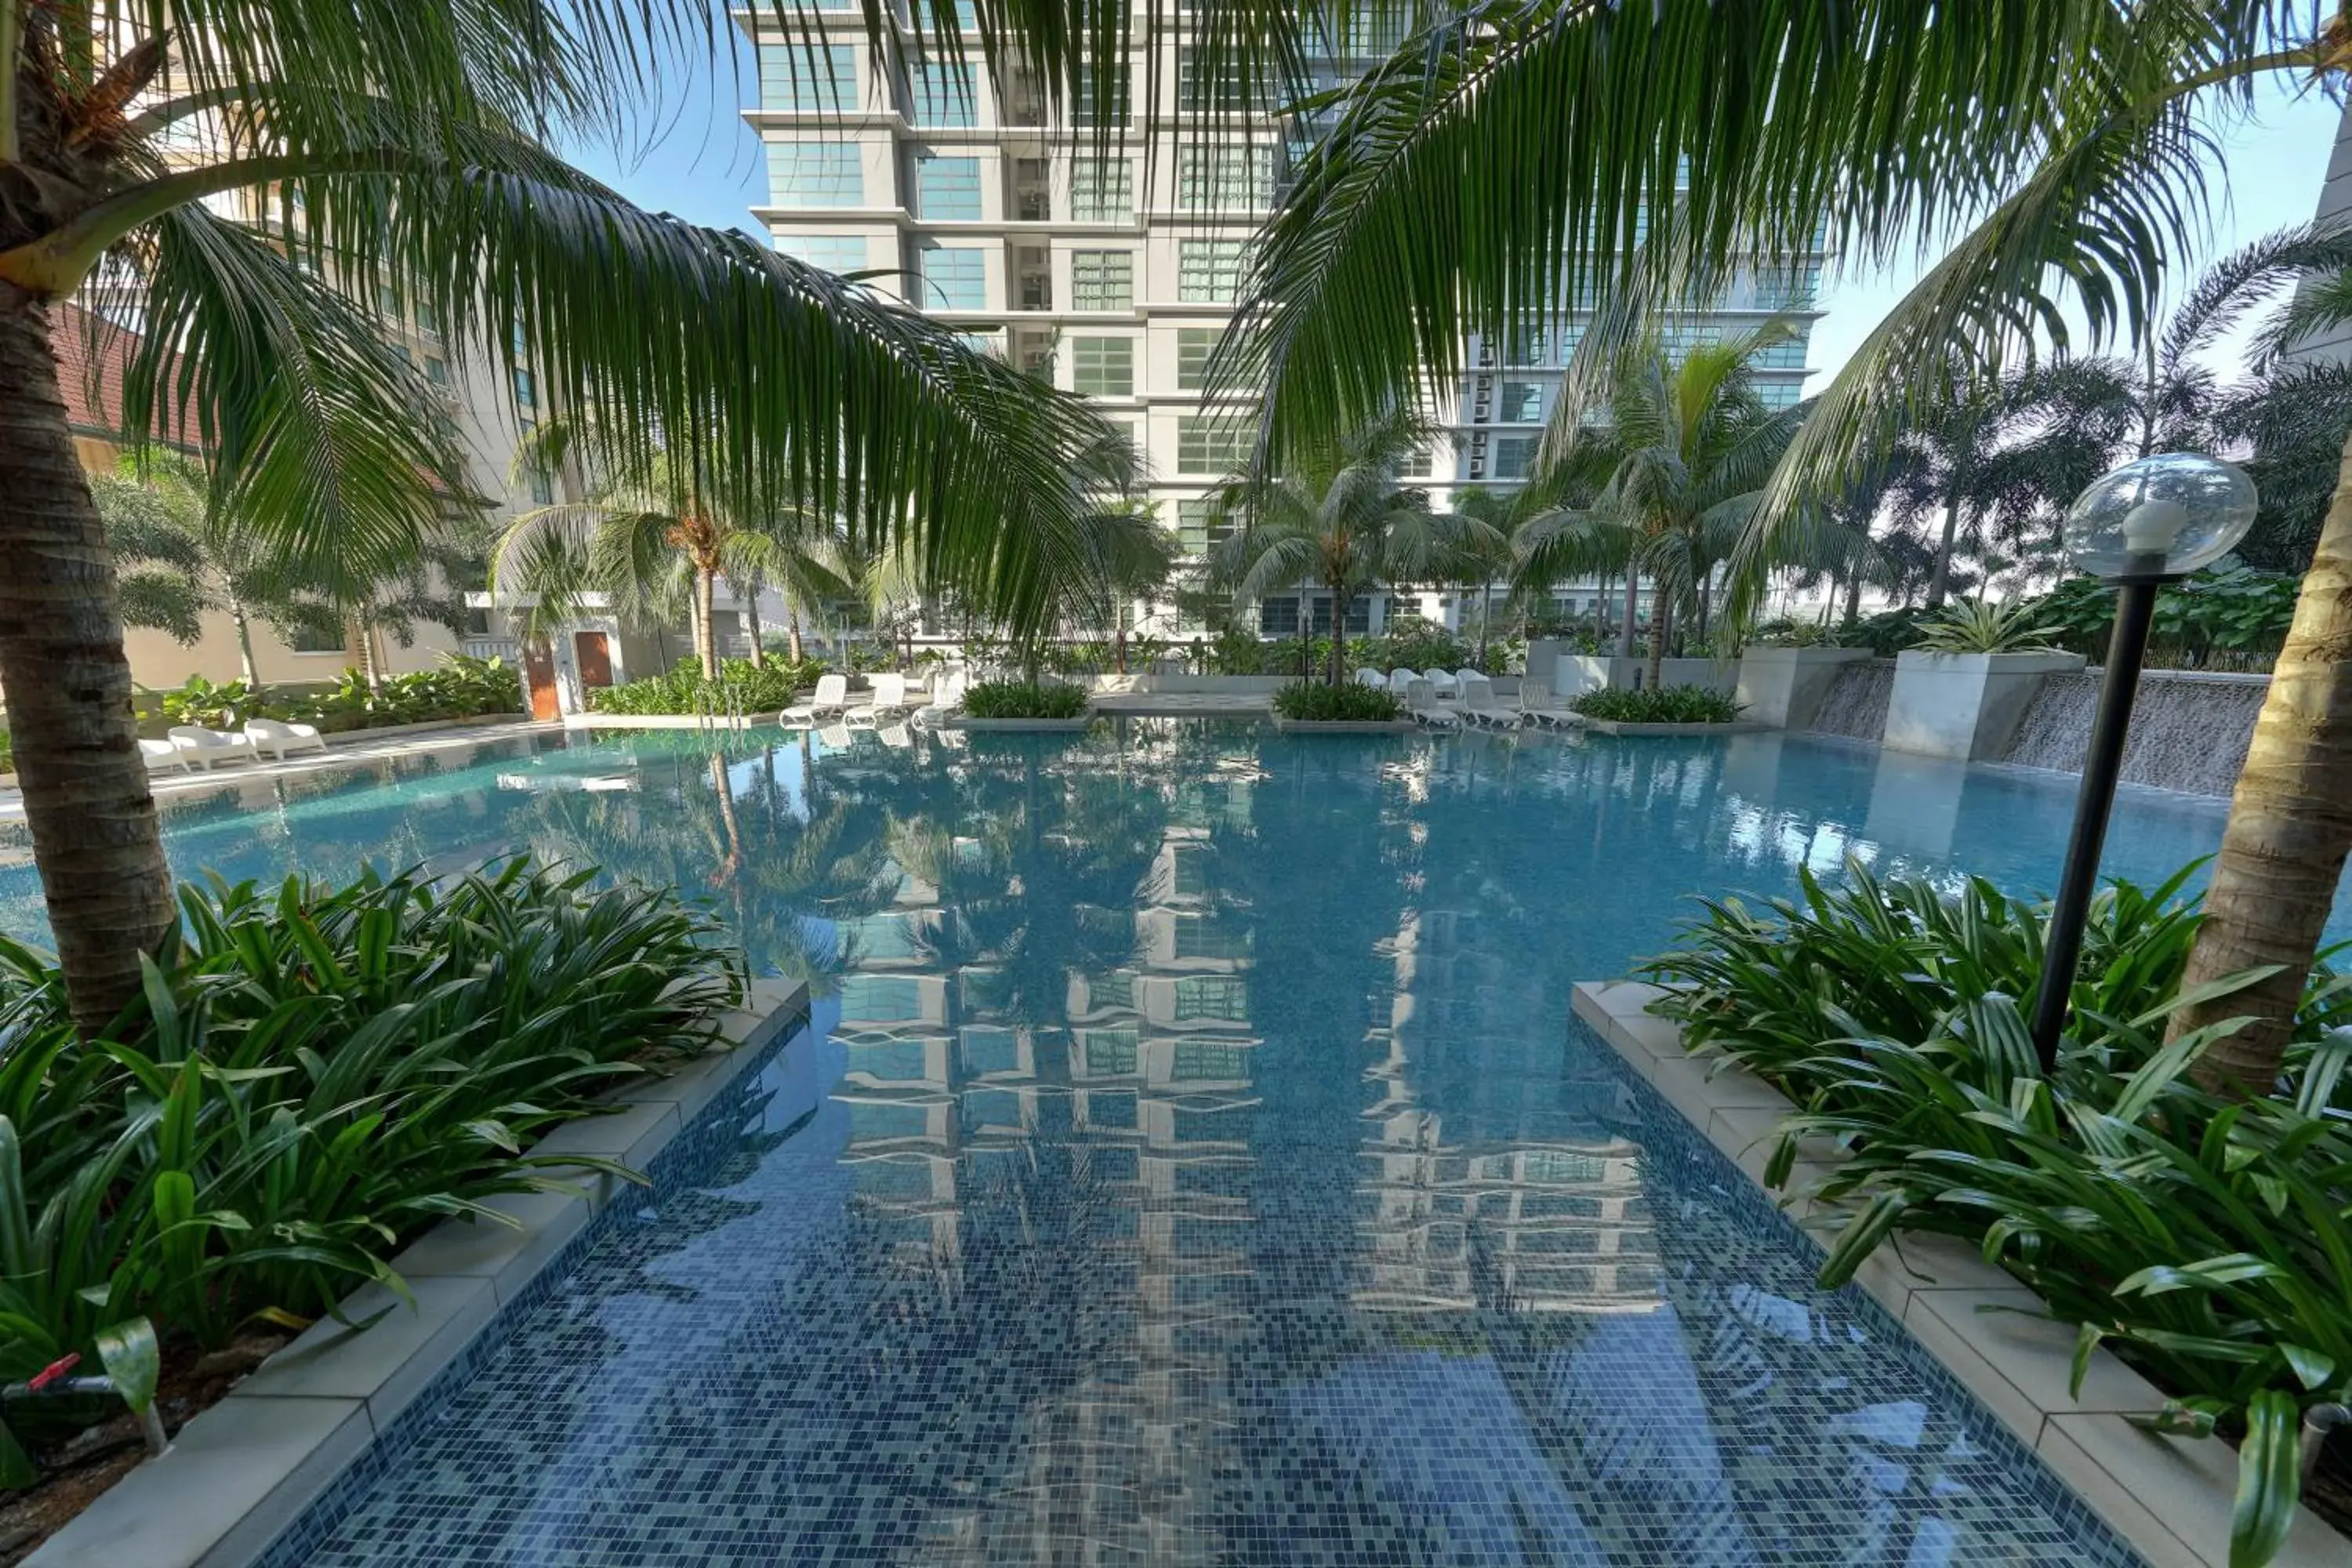 Swimming Pool in Acappella Suite Hotel, Shah Alam